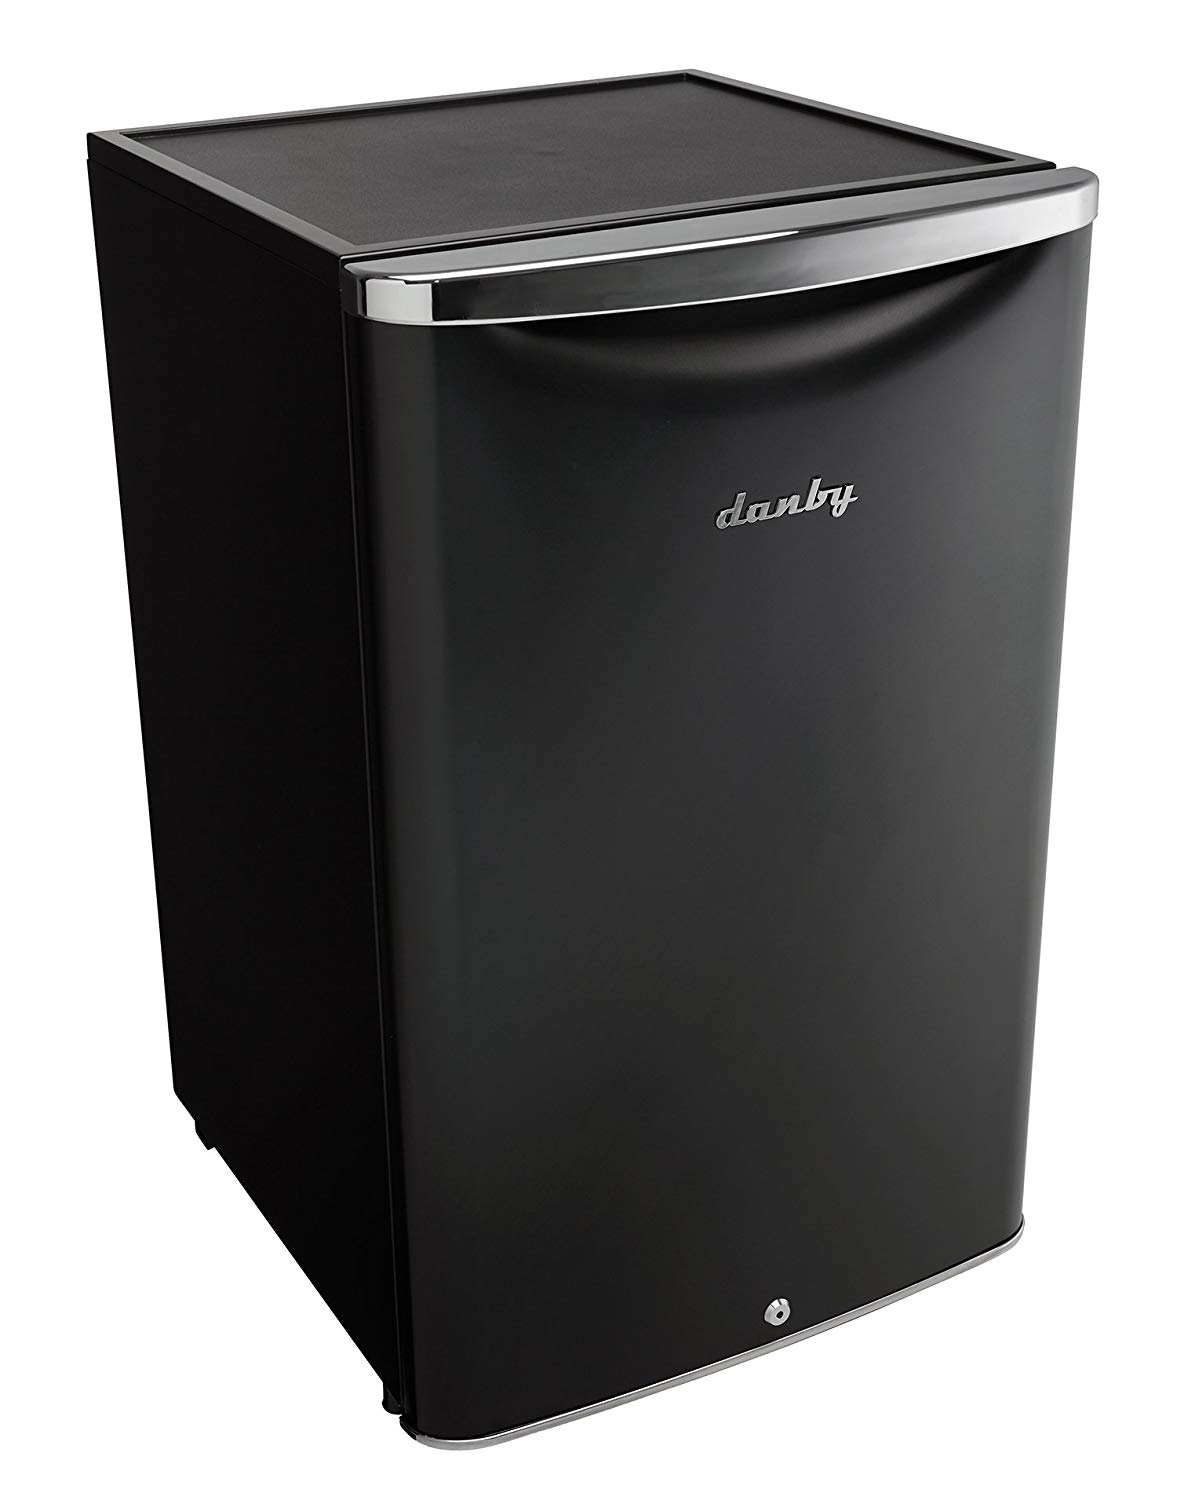 Danby DAR044A6MDB 4.4 cu.ft. Contemporary Classic Compact All Refrigerator, Midnight Metallic Black